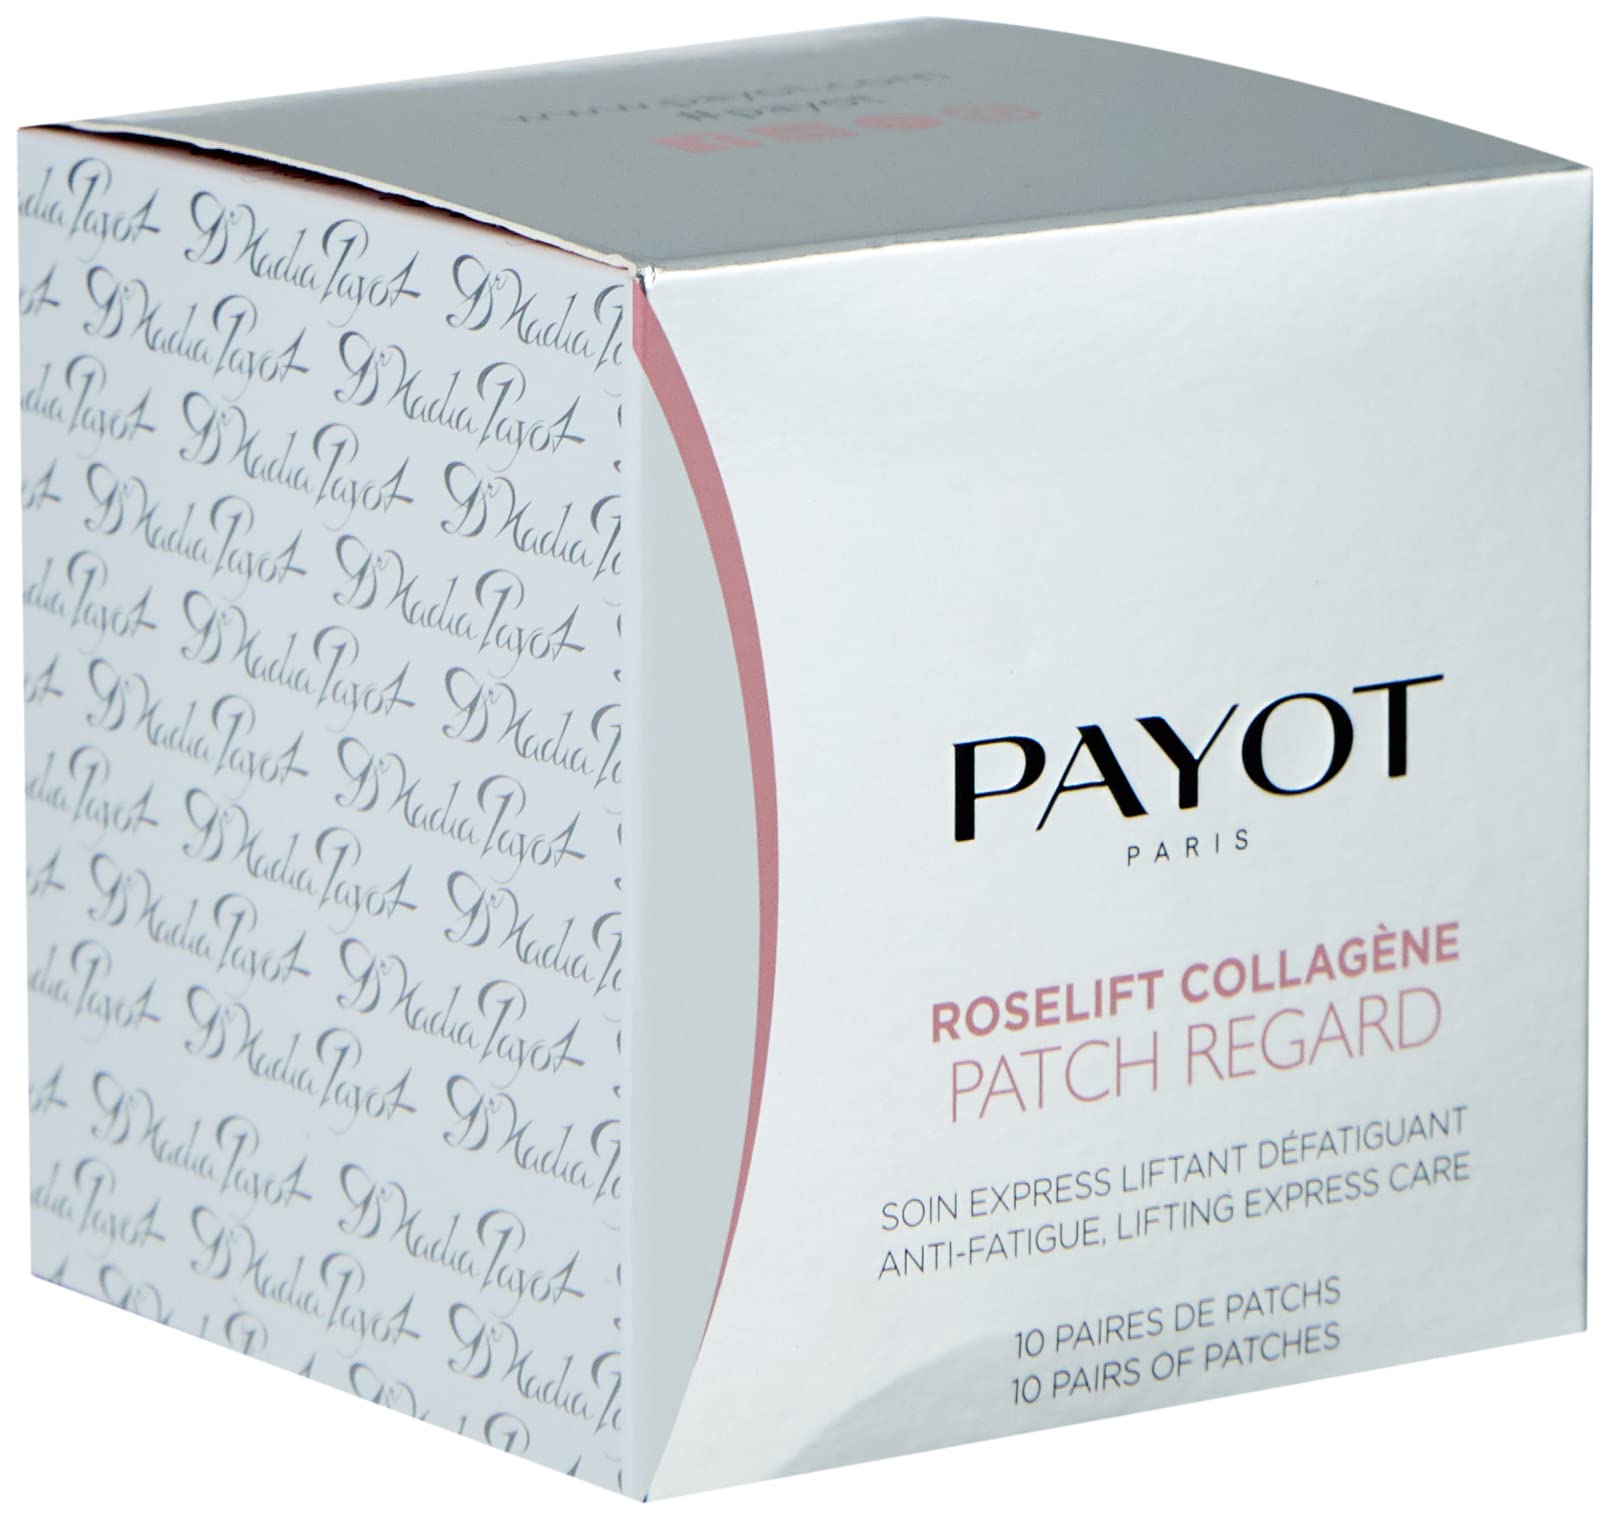 Payot Roselift Collagene Patch Regard Express Care 1stuk